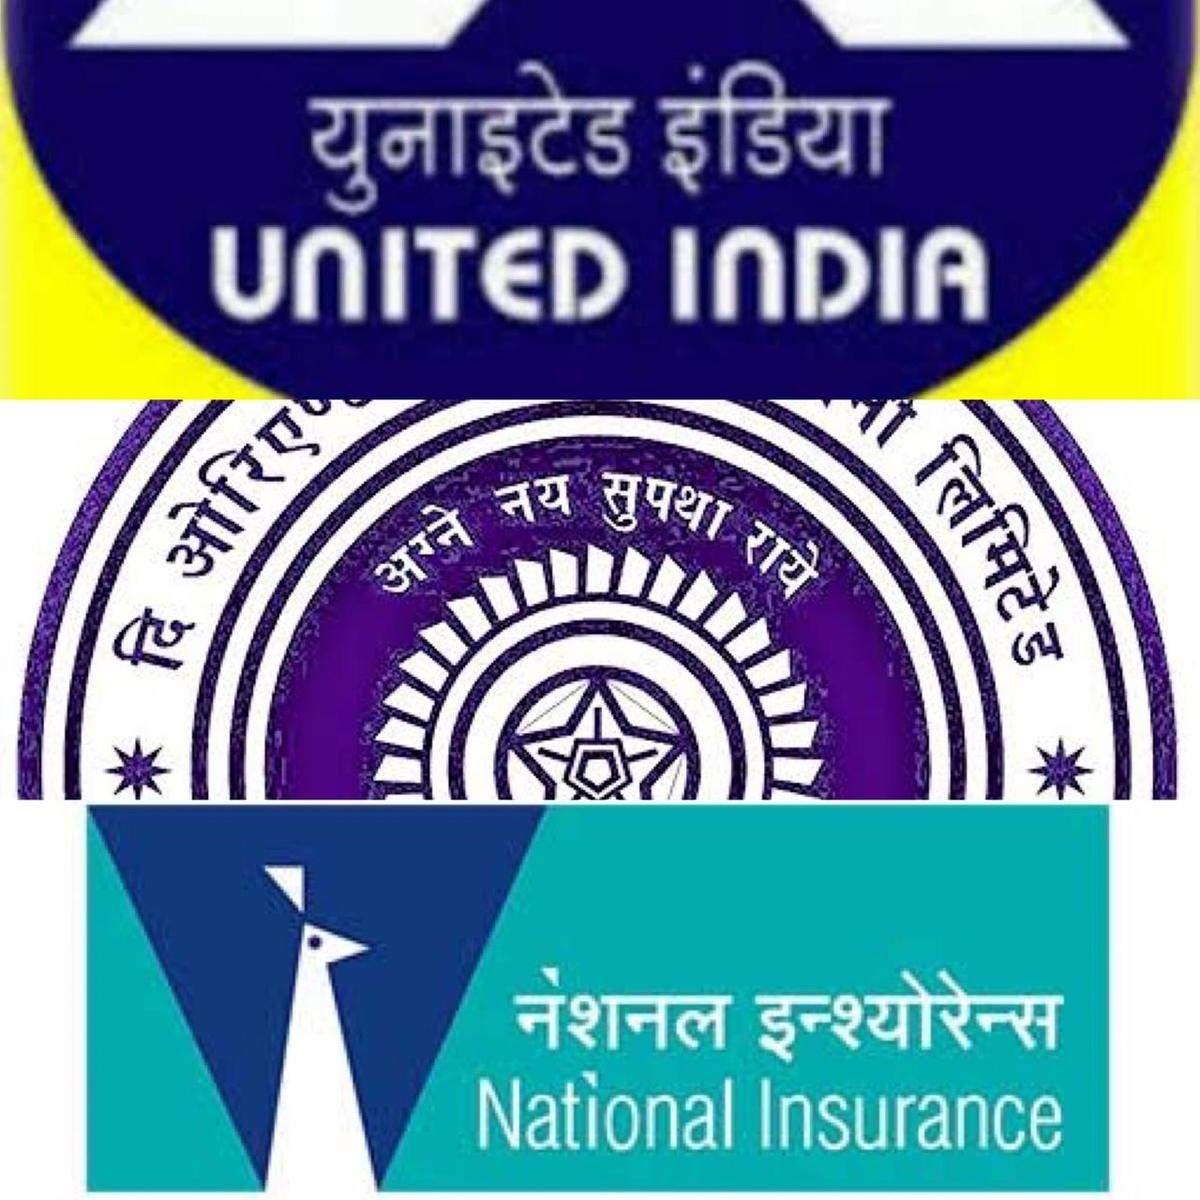 united india insurance in hindi